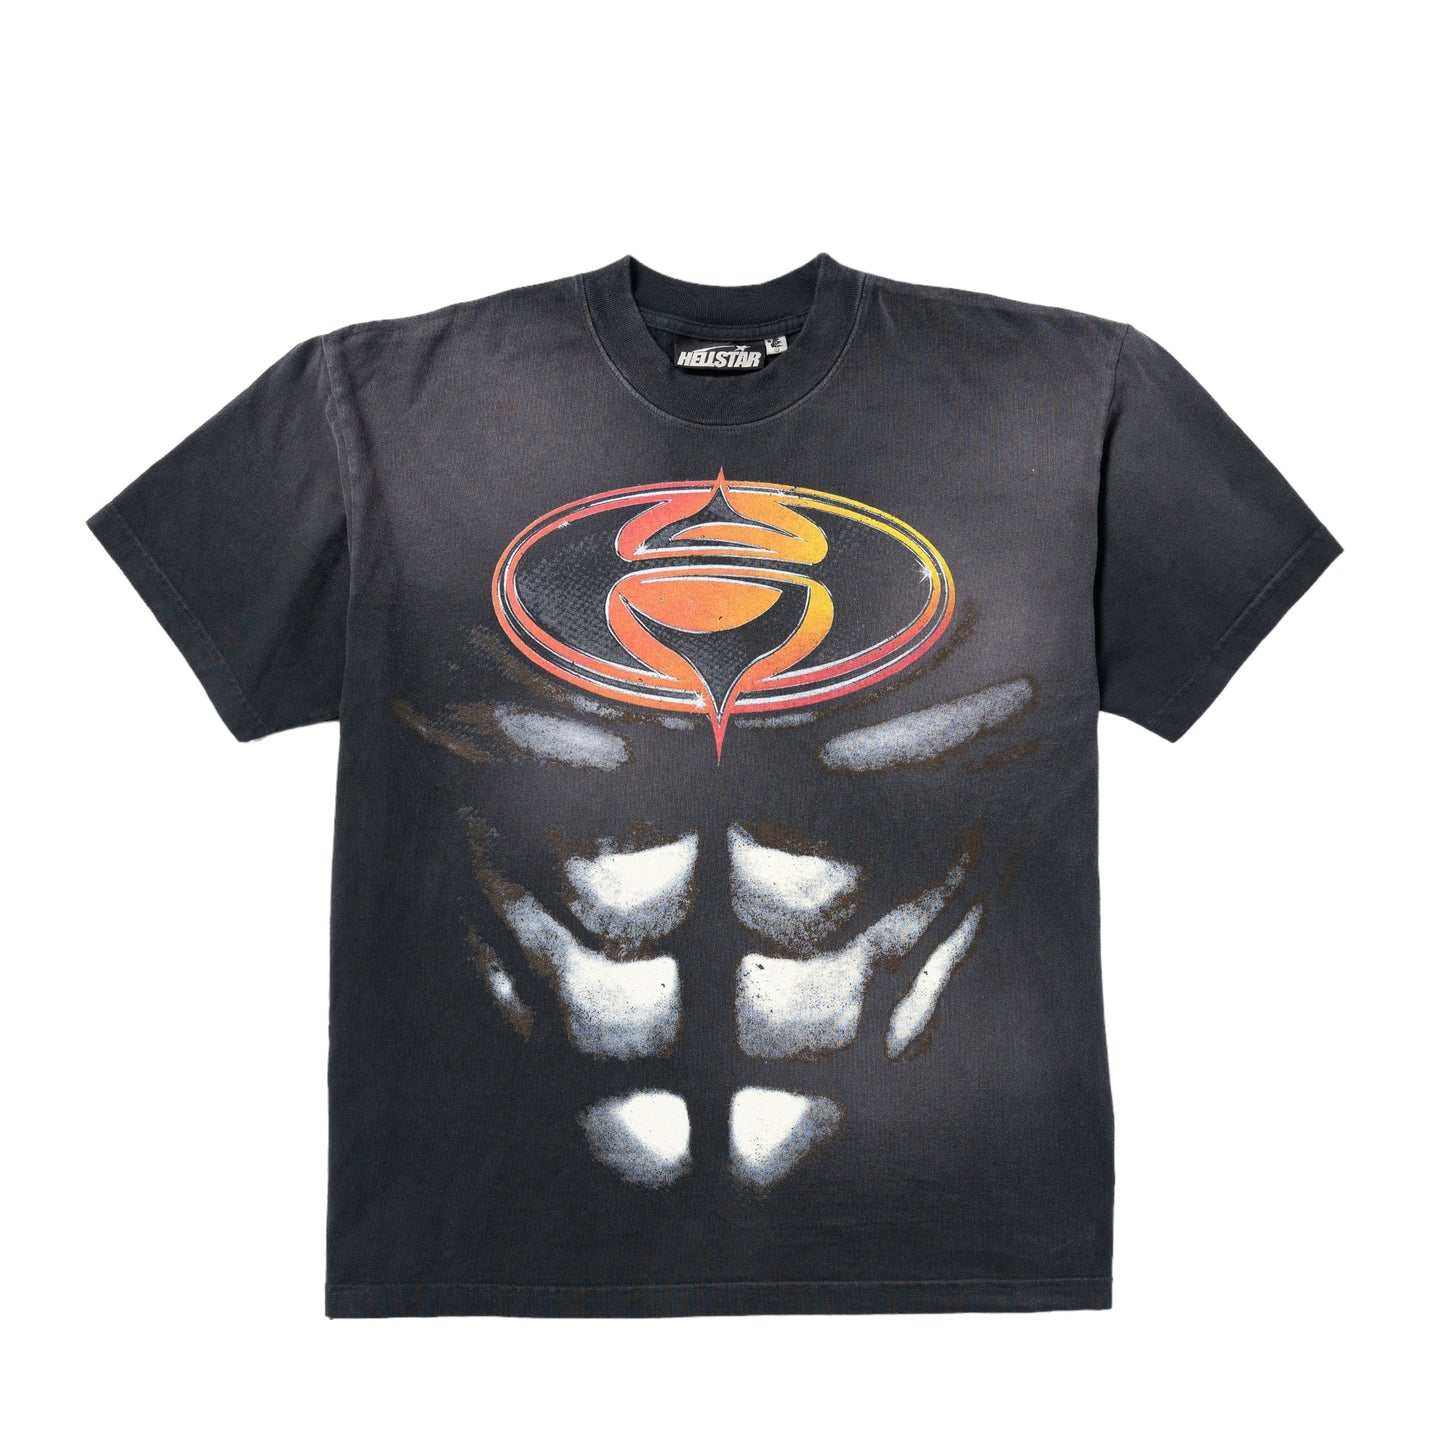 Hellstar Superhero T-Shirt - Supra Sneakers